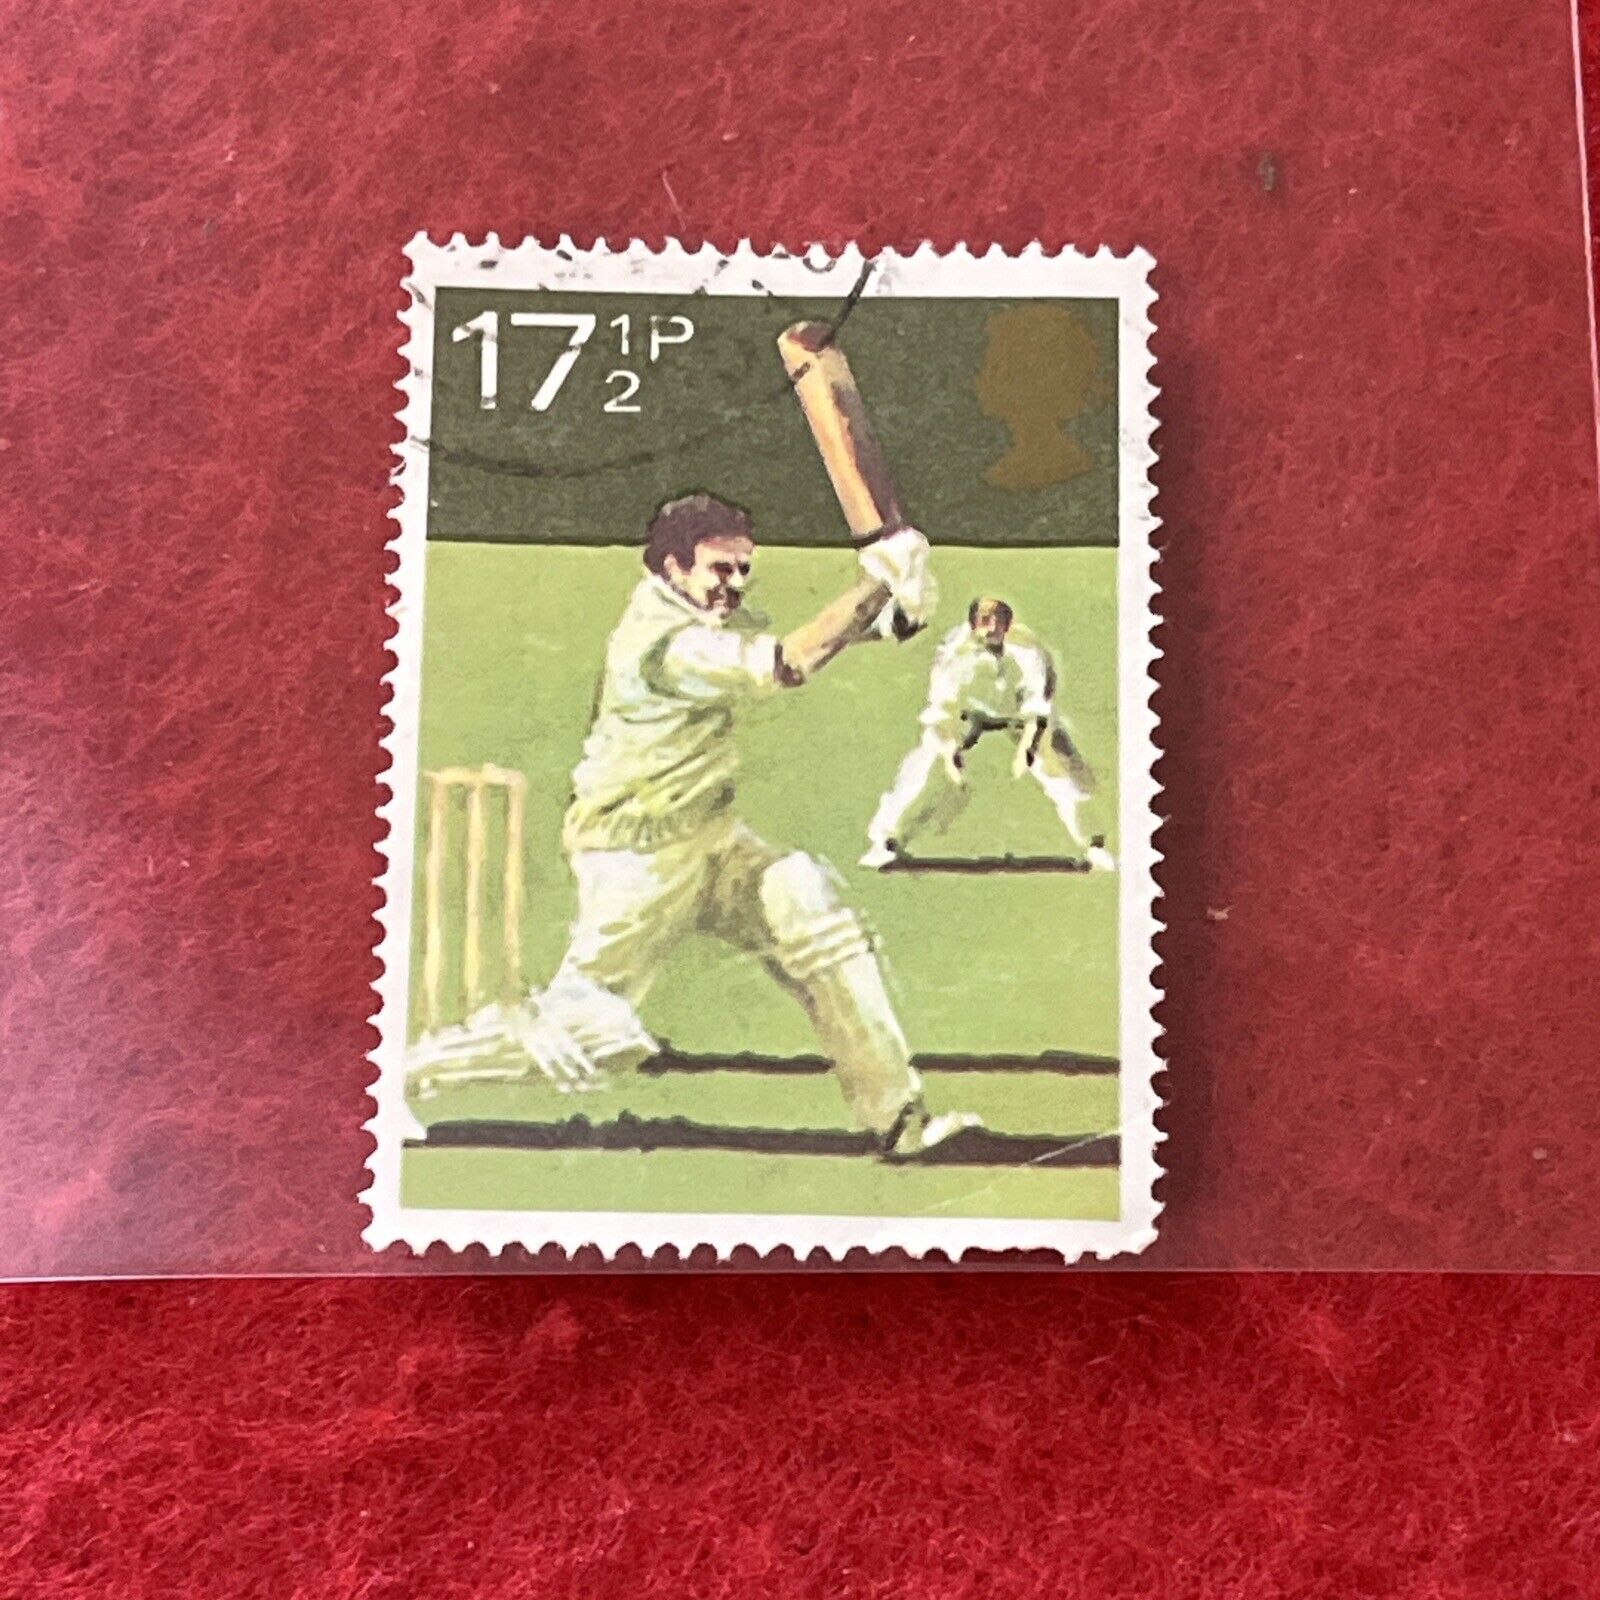 Vintage 1980 GREAT BRITAIN CRICKET (17 1/2) Stamp Used  G